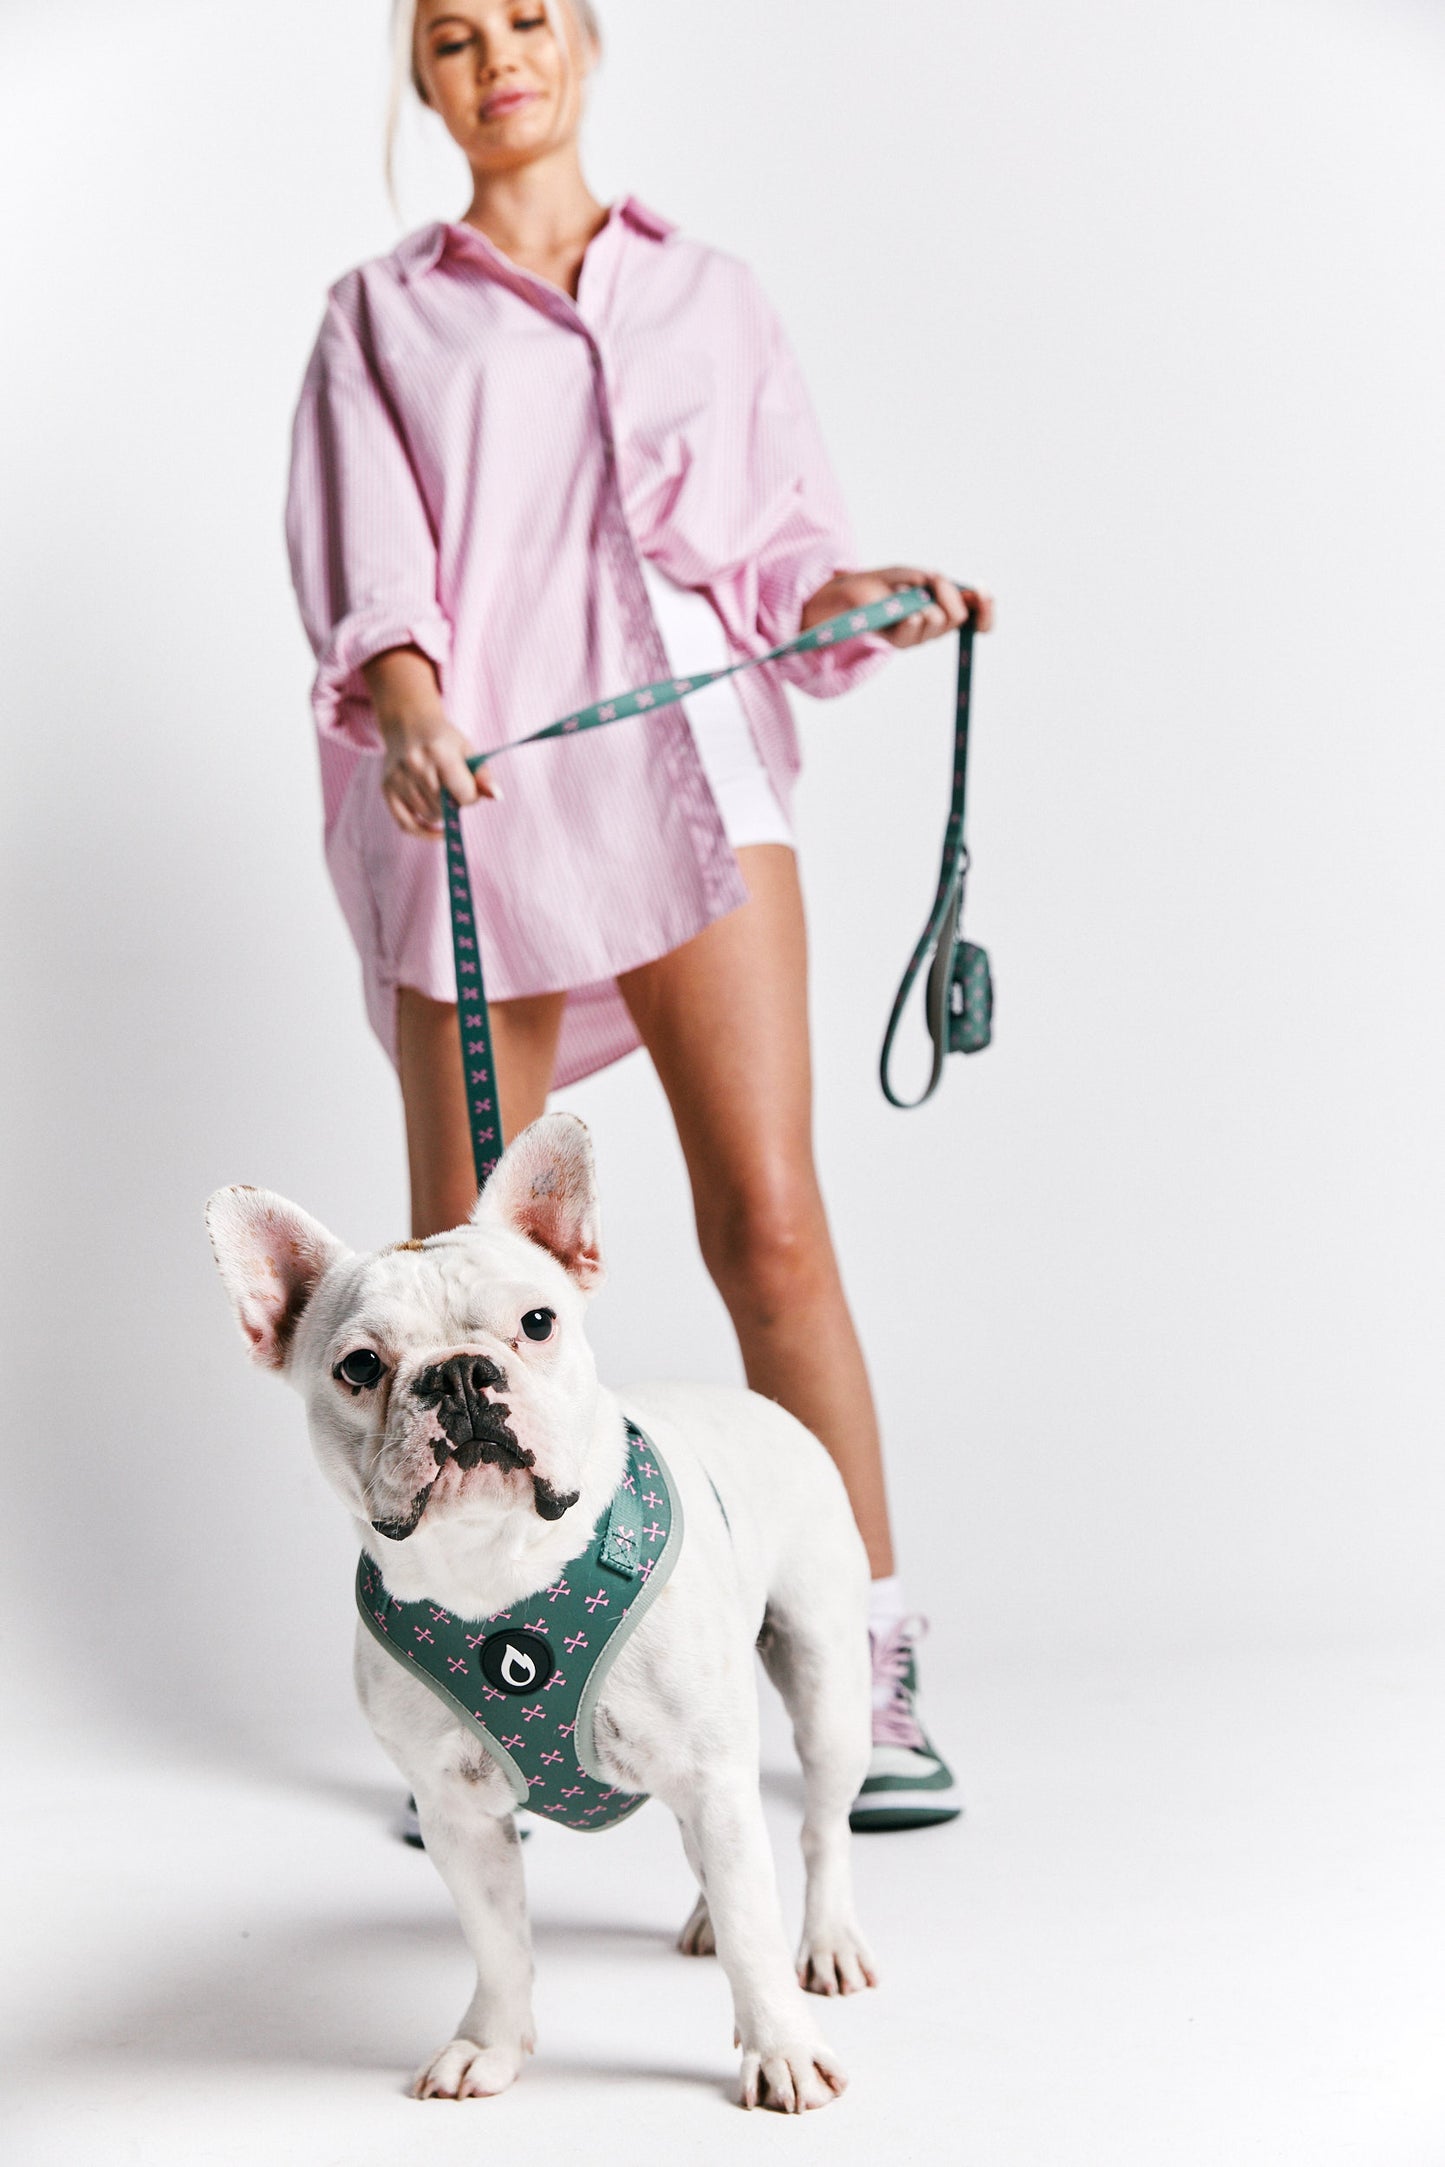 harness, collar, leash, poo bag, jon bone jovi, green, sizzzle dog accessories, adjustable, affordable, custom prints, pet supplies, fashion, designer